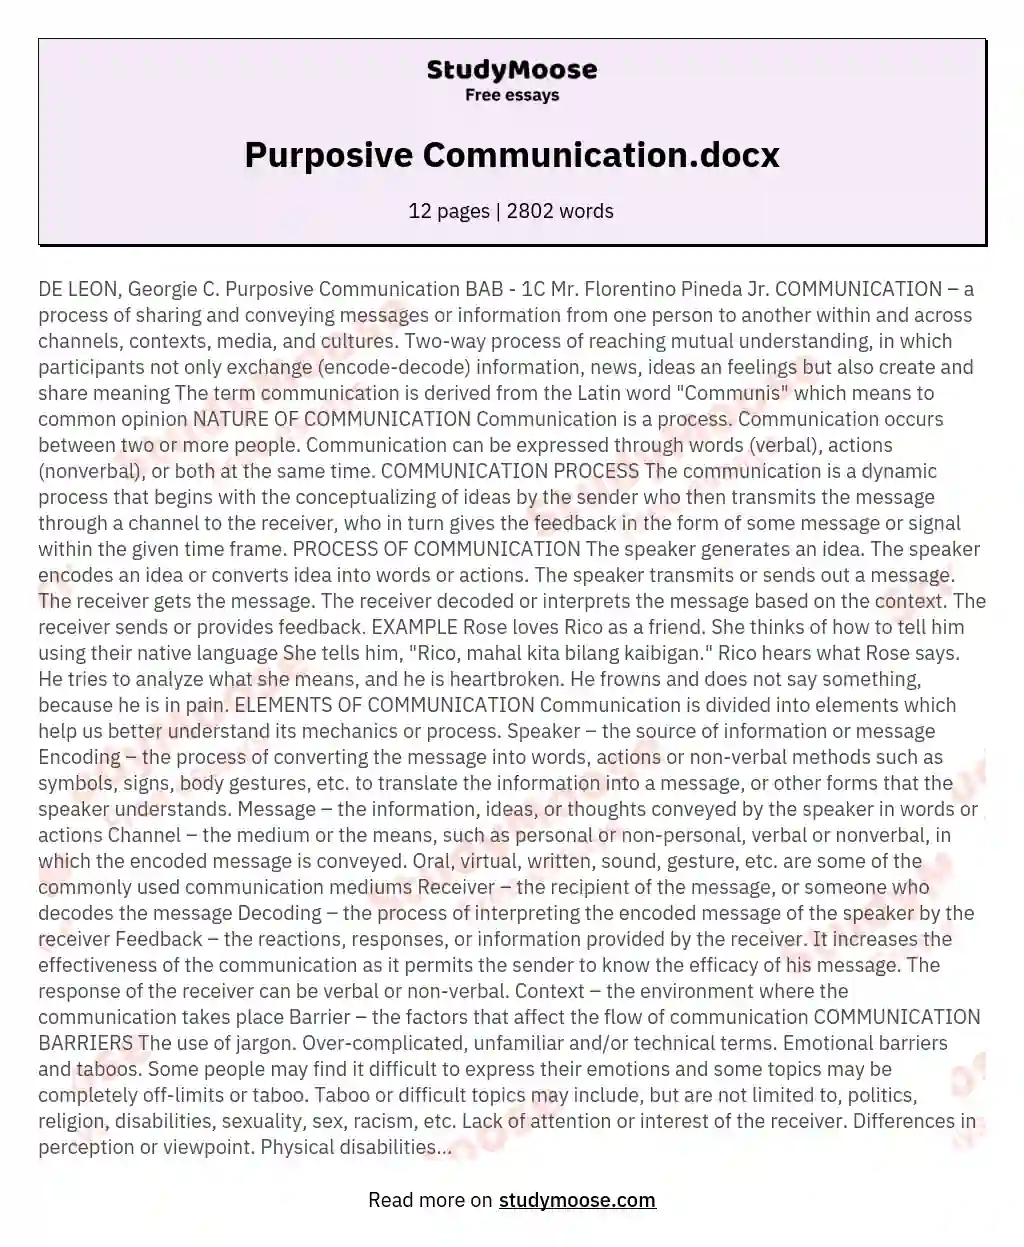 purposive communication essay example